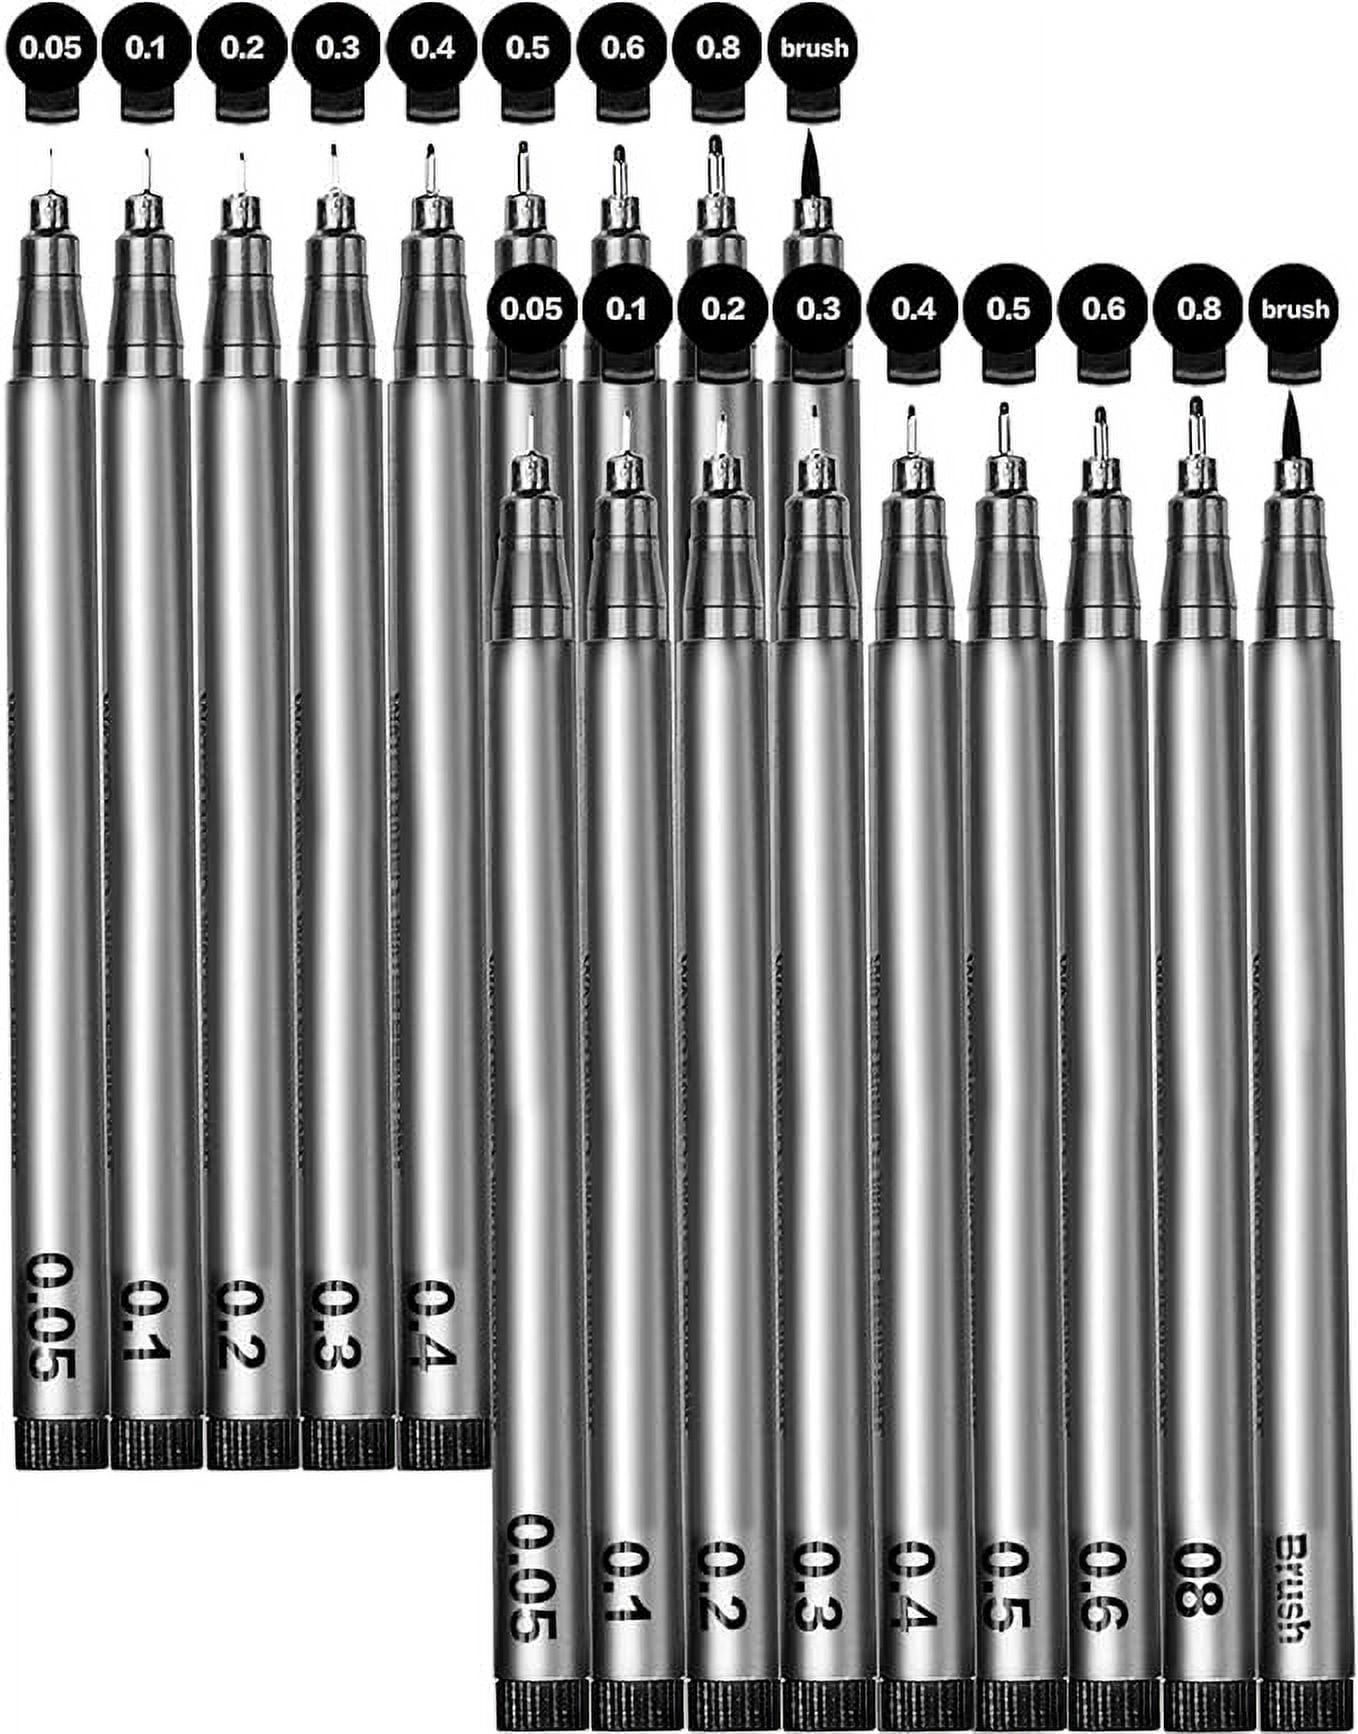 Black Micro-Pen Fineliner Ink Pens, Waterproof Archival Ink